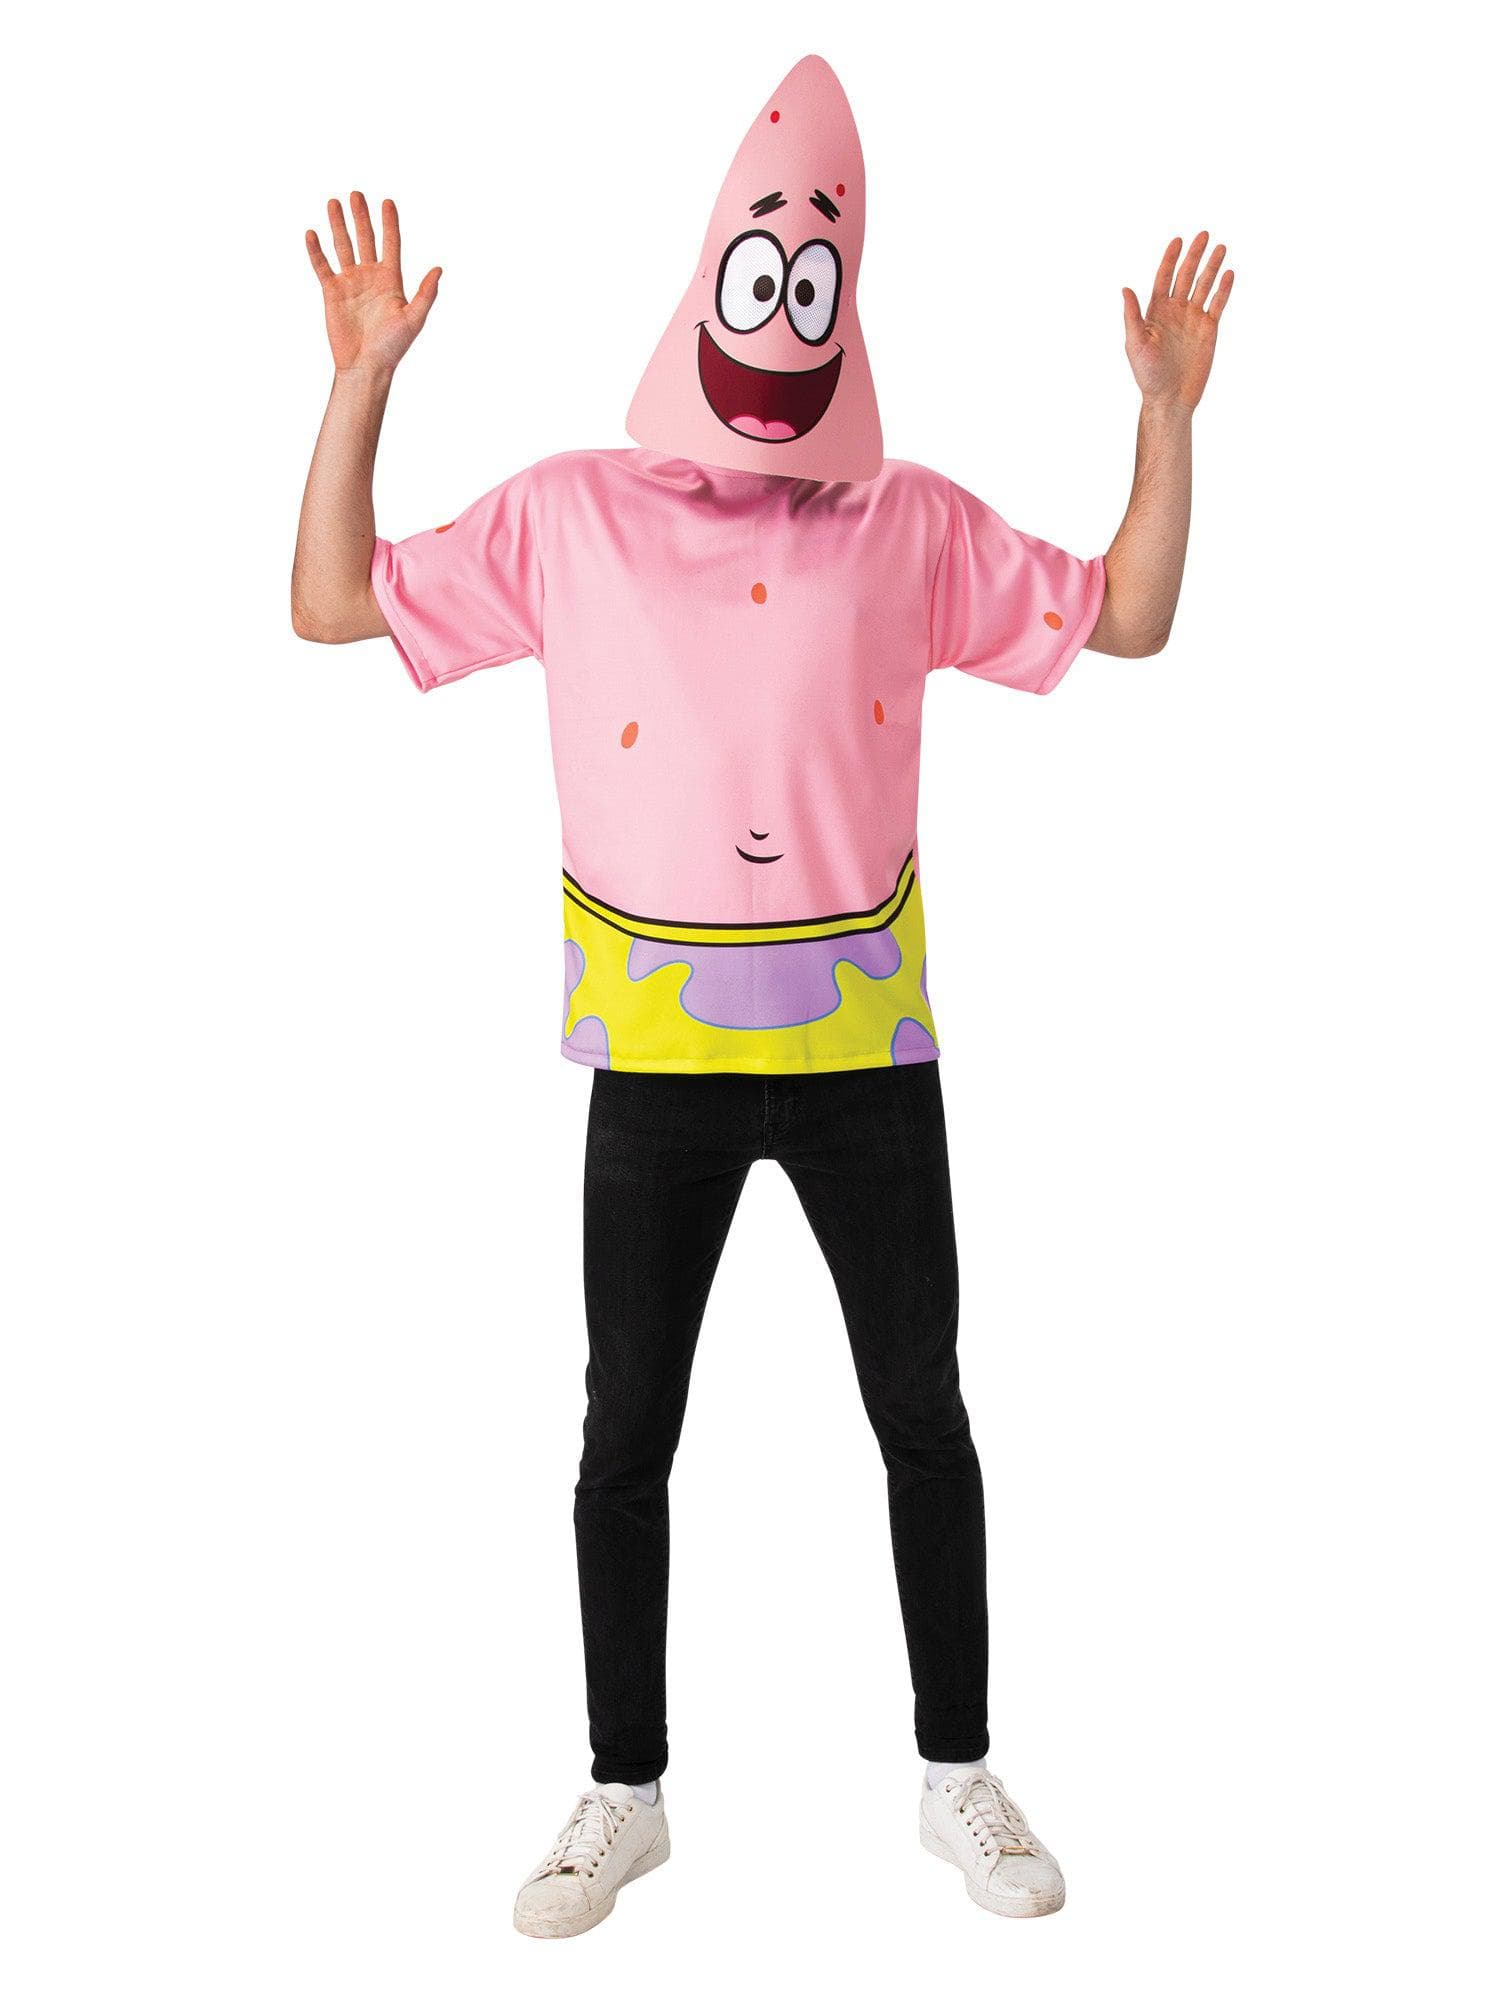 SpongeBob SquarePants Patrick Star Adult Costume - costumes.com